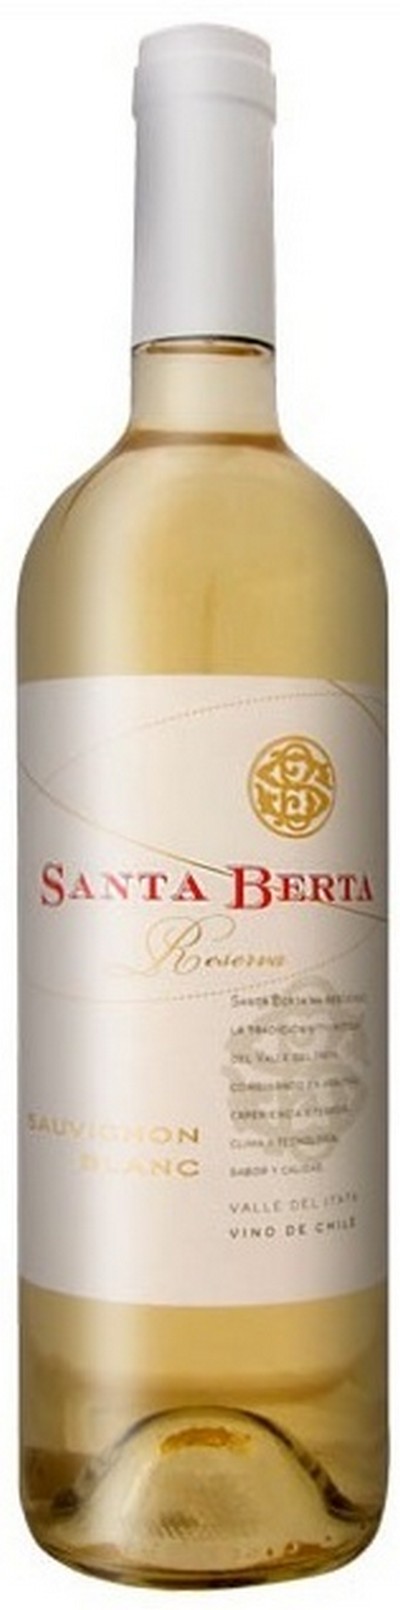 sauvignon-blanc-reserva-santa-berta-2015